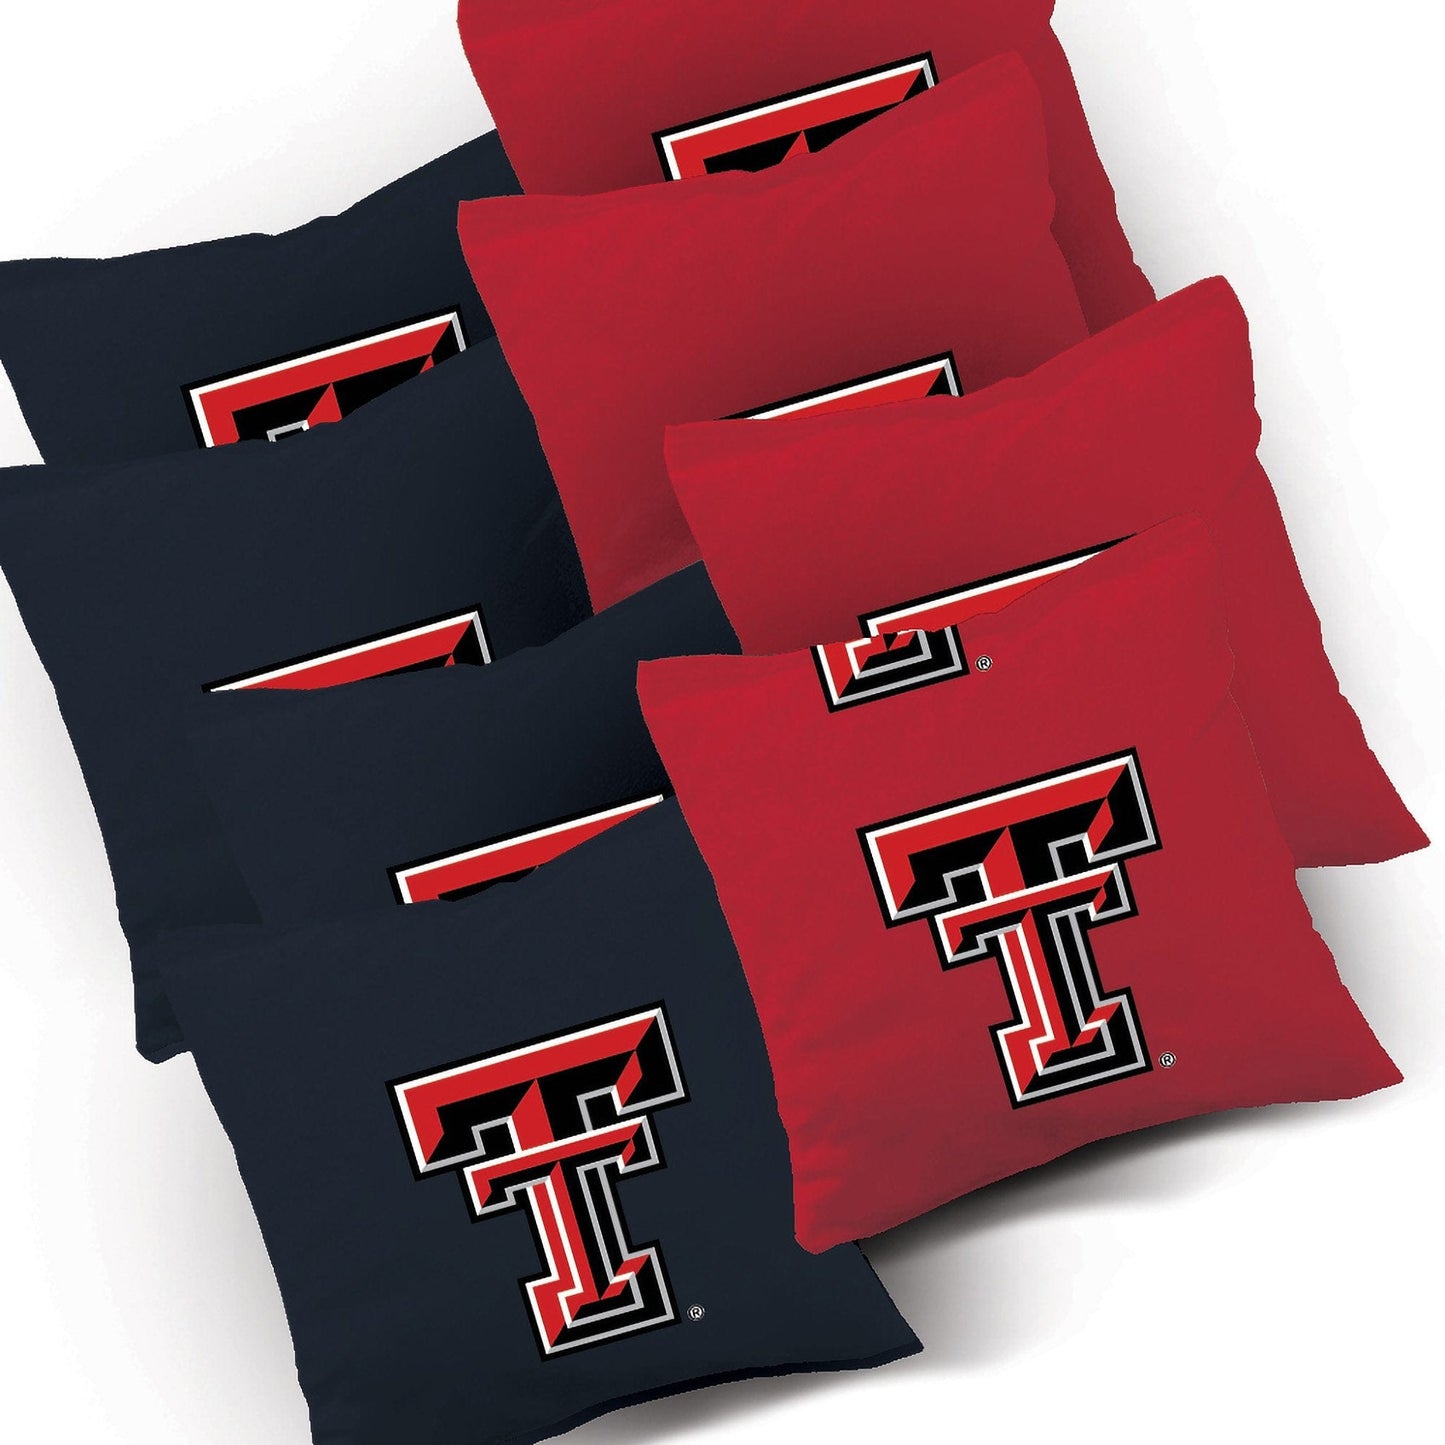 Texas Tech Red Raiders Swoosh team logo bags